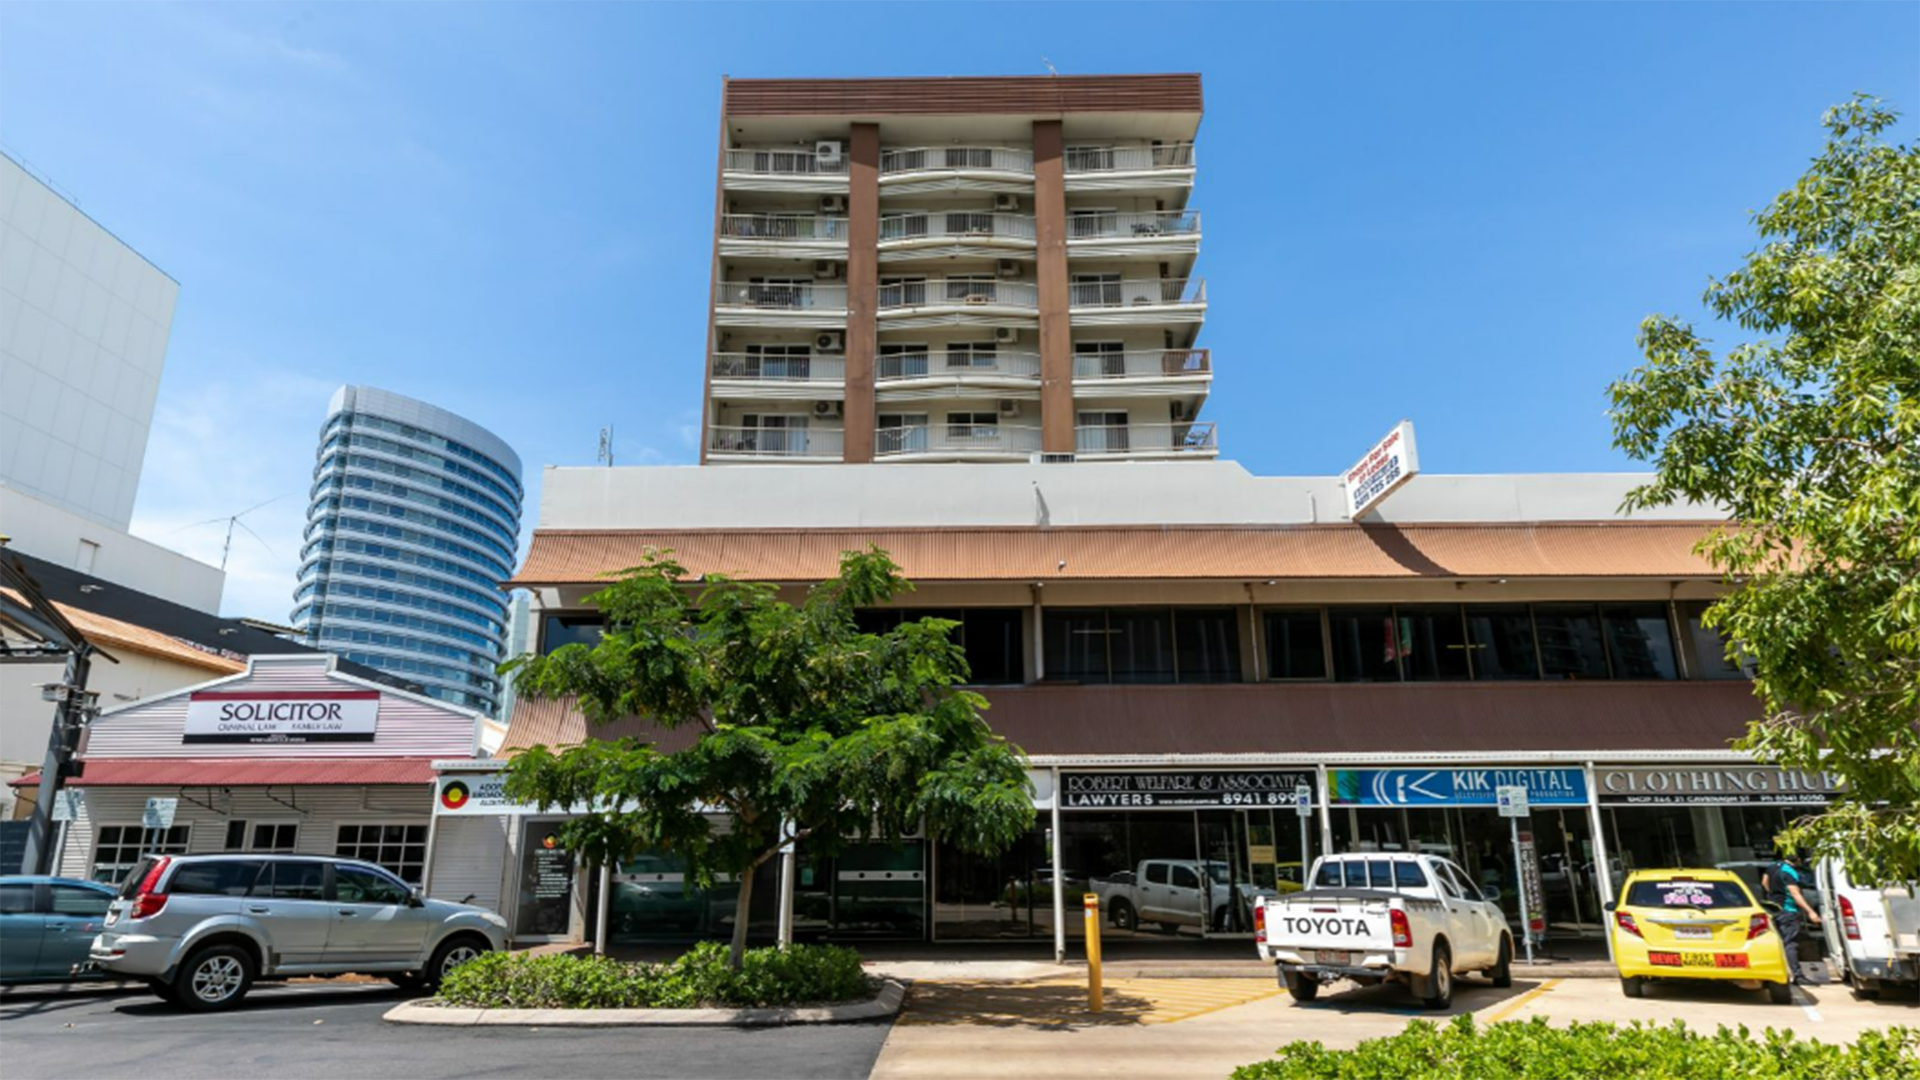 Baffling floorplan on $190,000 studio apartment for sale in Darwin City